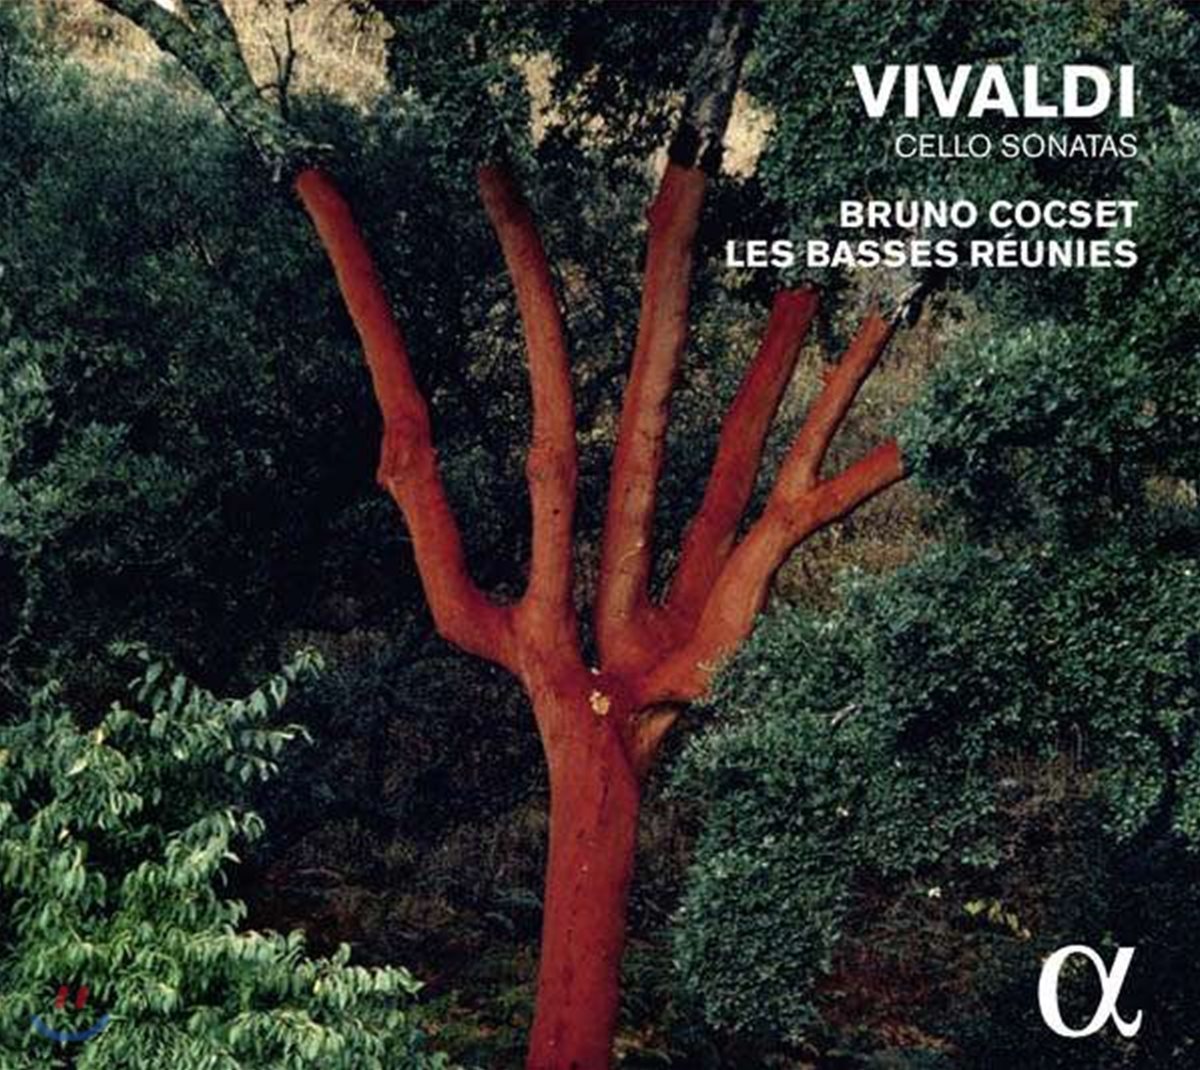 Bruno Cocset 비발디: 첼로 소나타 (Vivaldi: Cello Sonatas Op.14) 